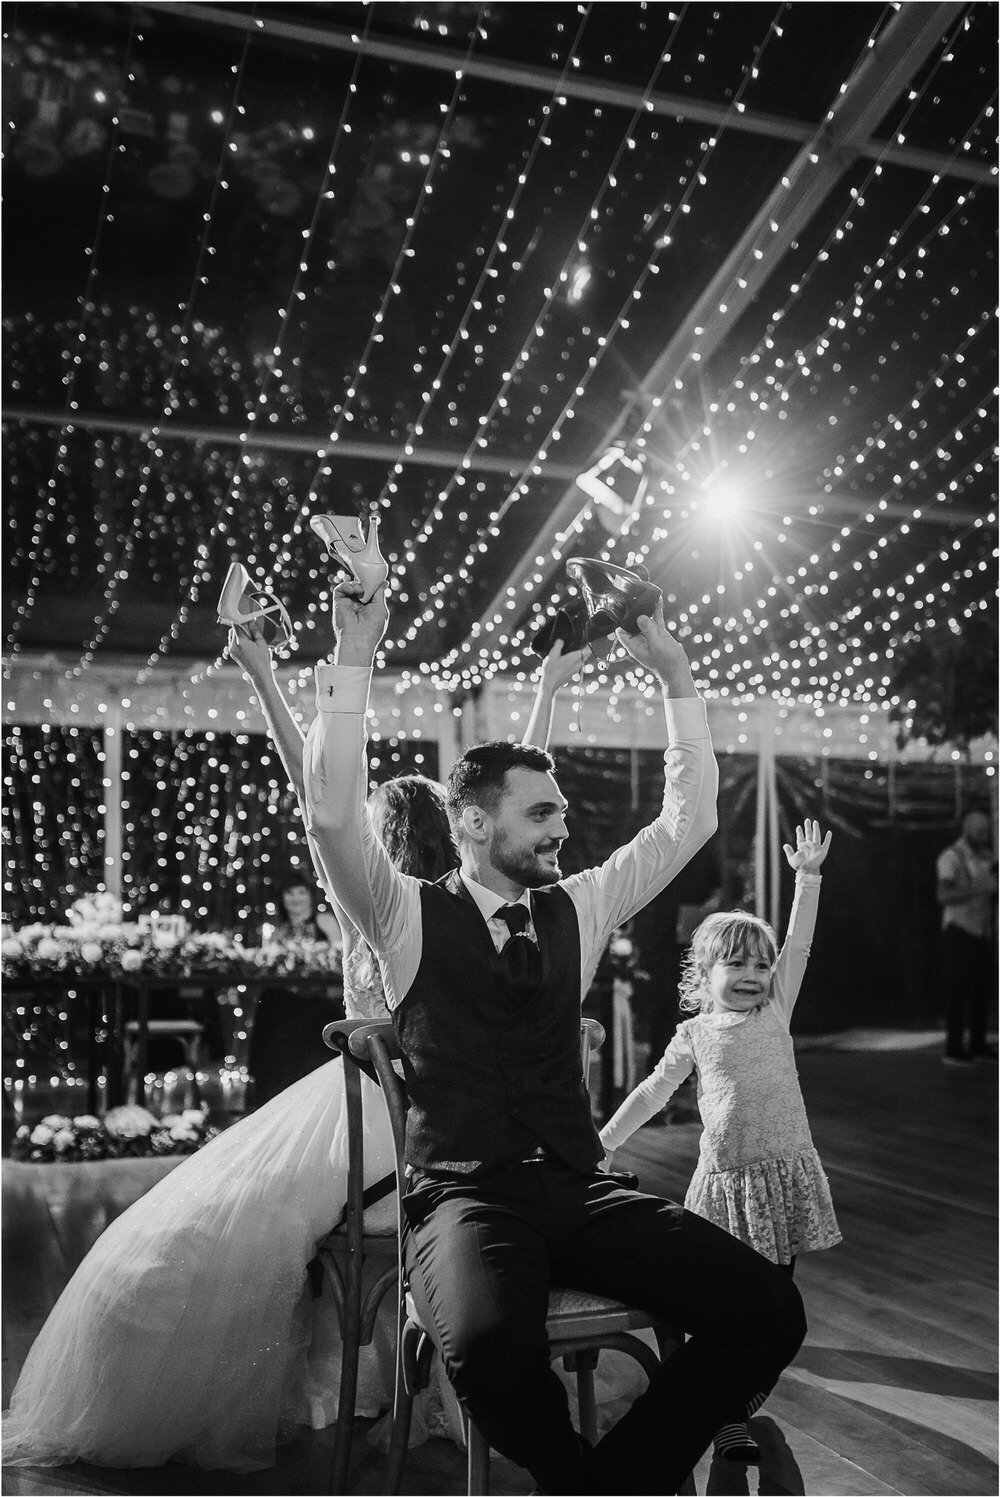 best of wedding photography 2019 photographer italy ireland tuscany santorini greece spain barcelona lake como chateux scotland destination wedding 0160.jpg